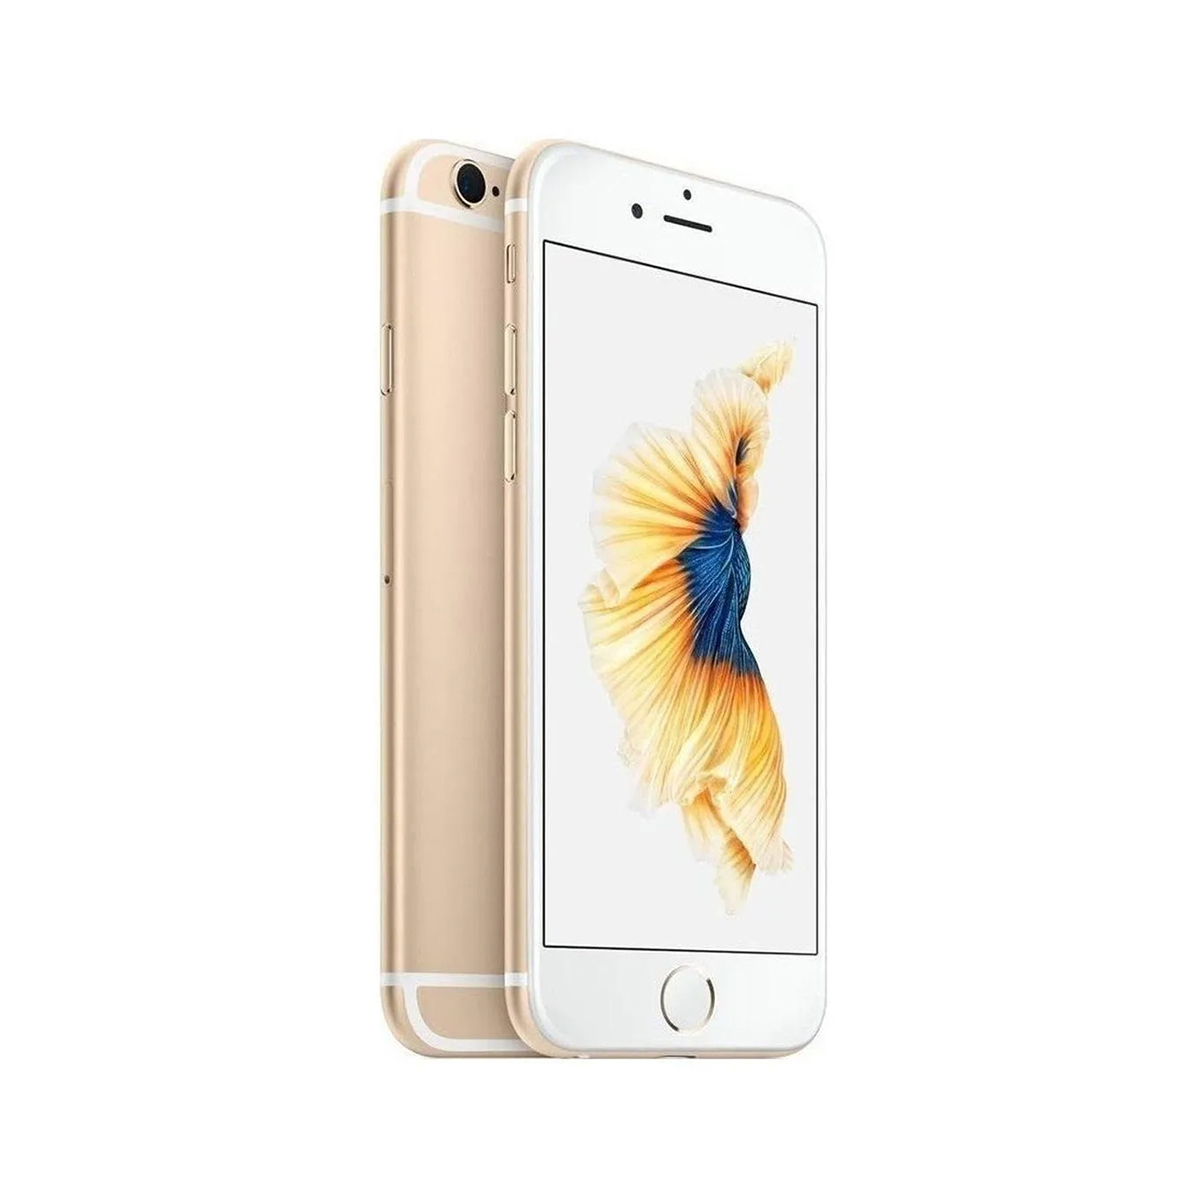 Apple iPhone 6s 16GB Tela 4.7' 4G 12MP Anatel - Seminovo